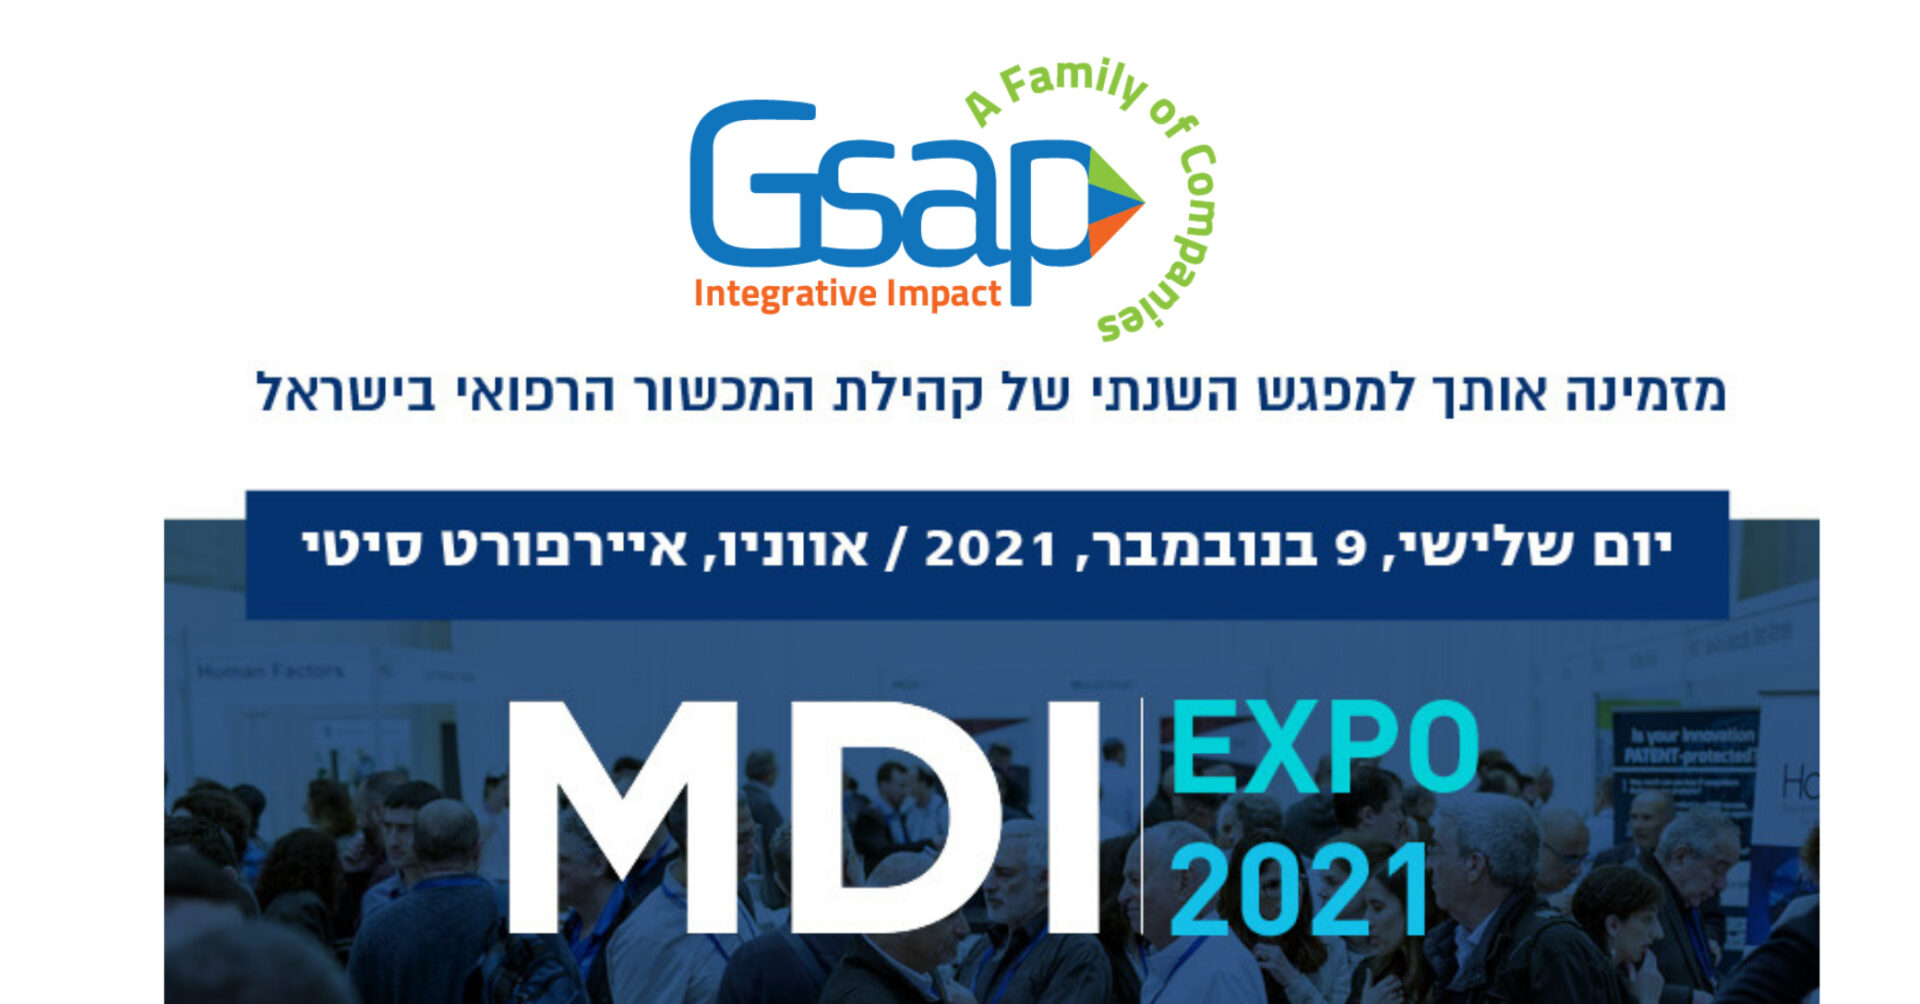 MDI Expo 2021